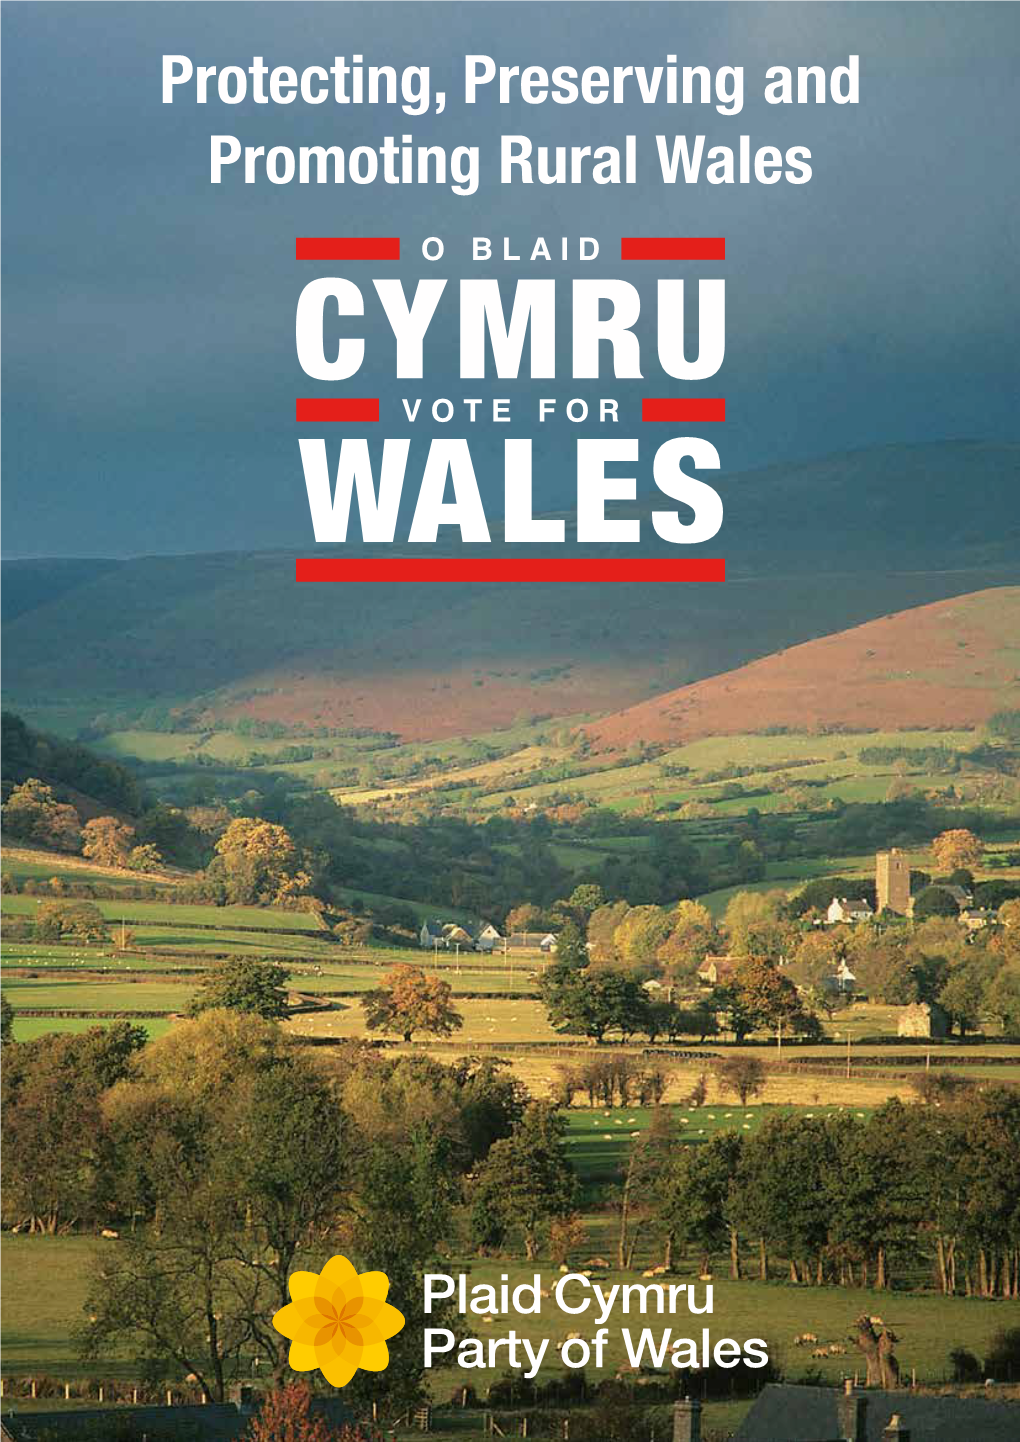 Rural Manifesto 2021 Plaid Cymru Rural Manifesto 2021 - Protecting, Preserving and Promoting Rural Wales | 3 SUPPORTING WELSH FARMERS